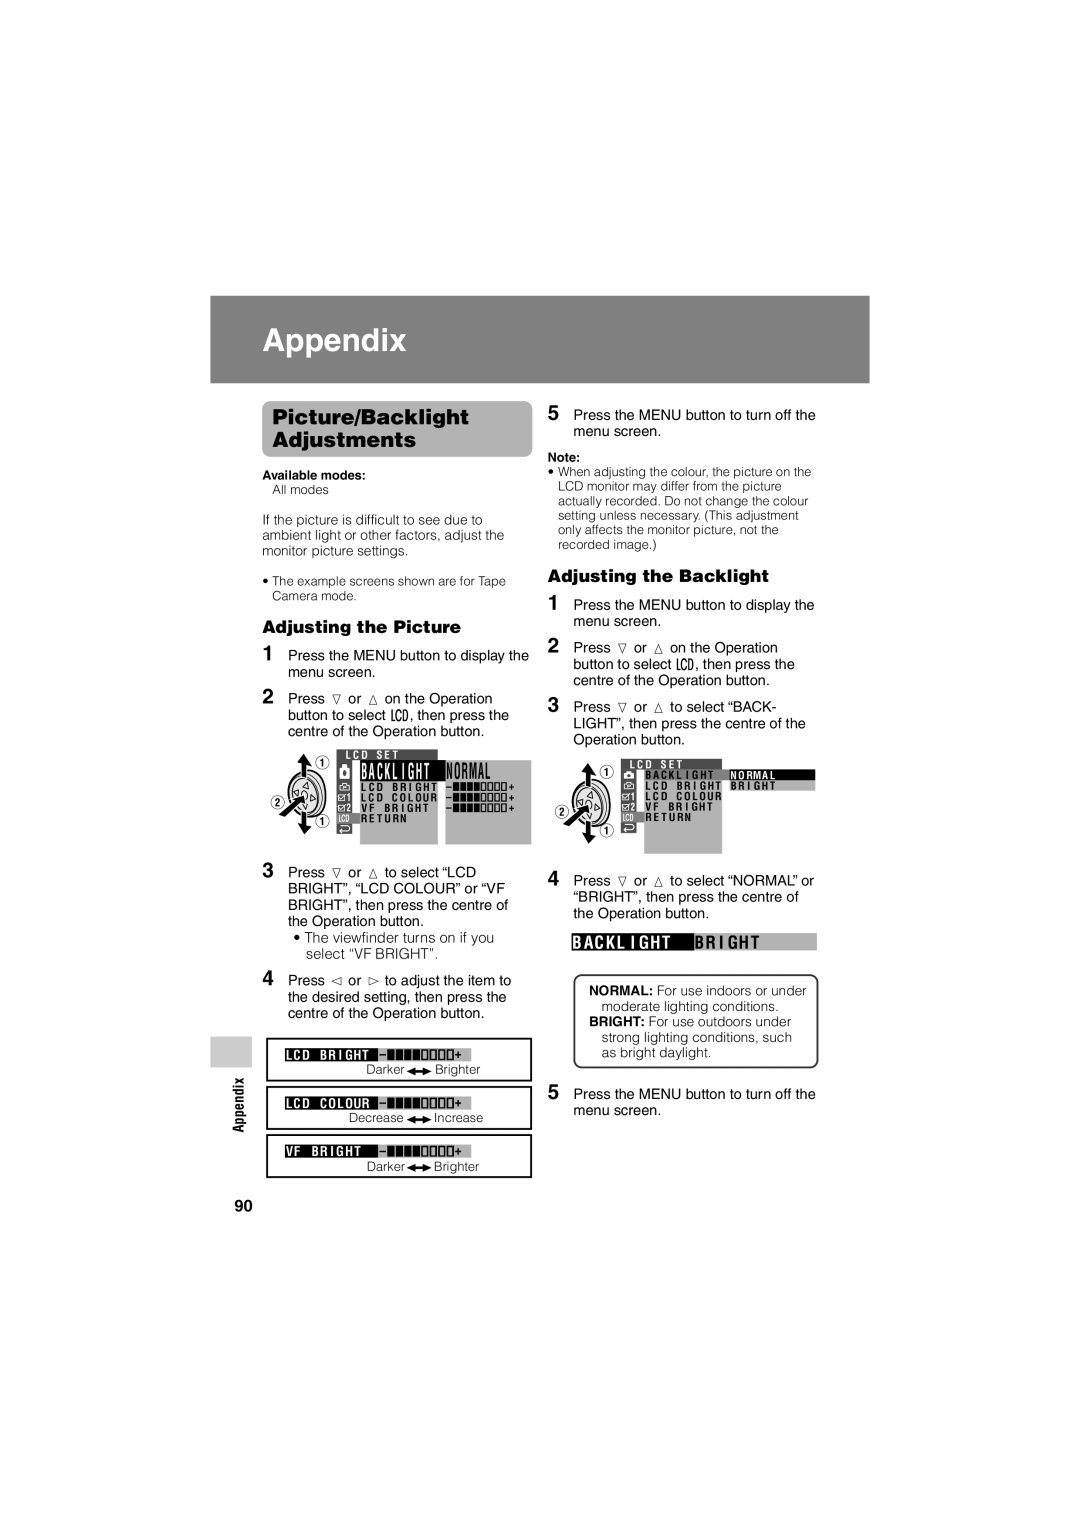 Sharp VL-Z400H-T operation manual Appendix, Picture/Backlight Adjustments, Adjusting the Picture, Adjusting the Backlight 